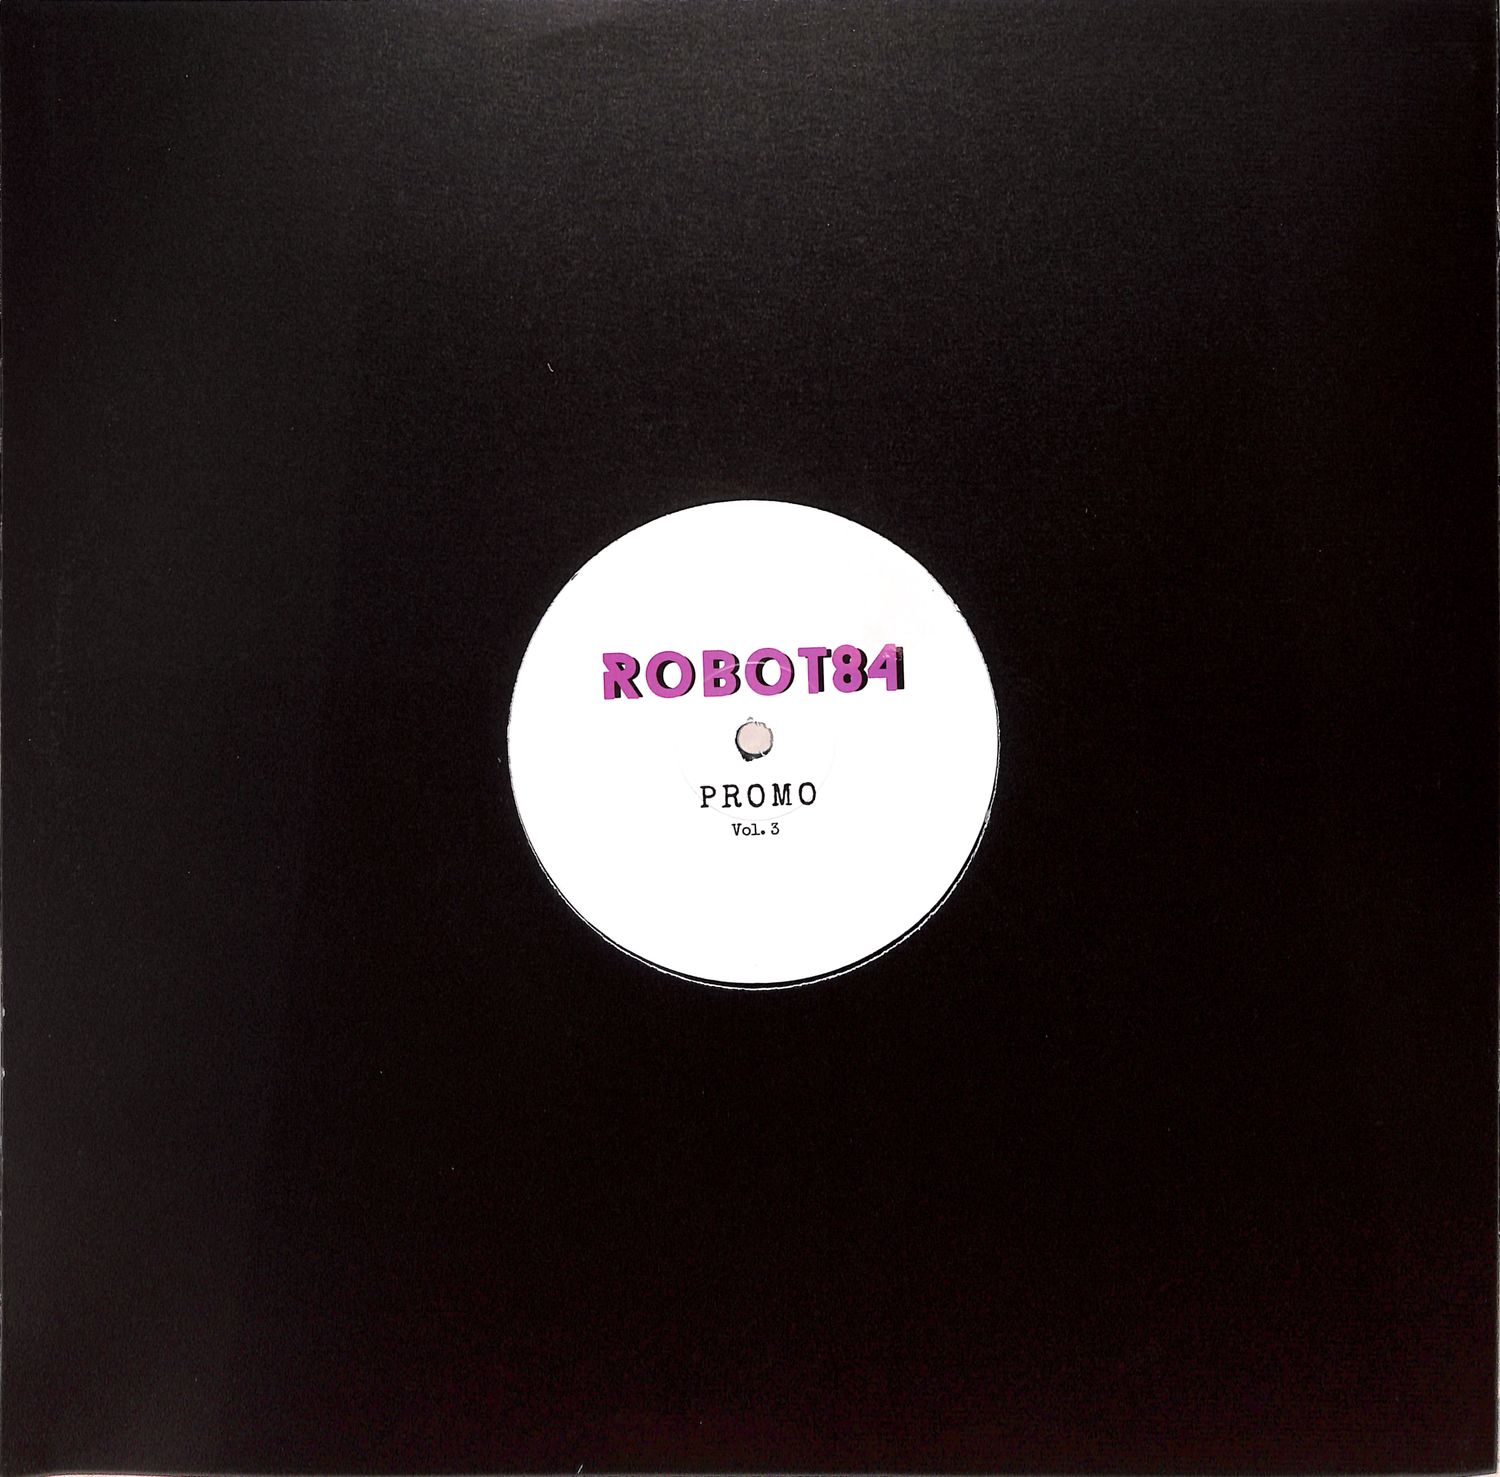 Robot84 - PROMO VOL 3